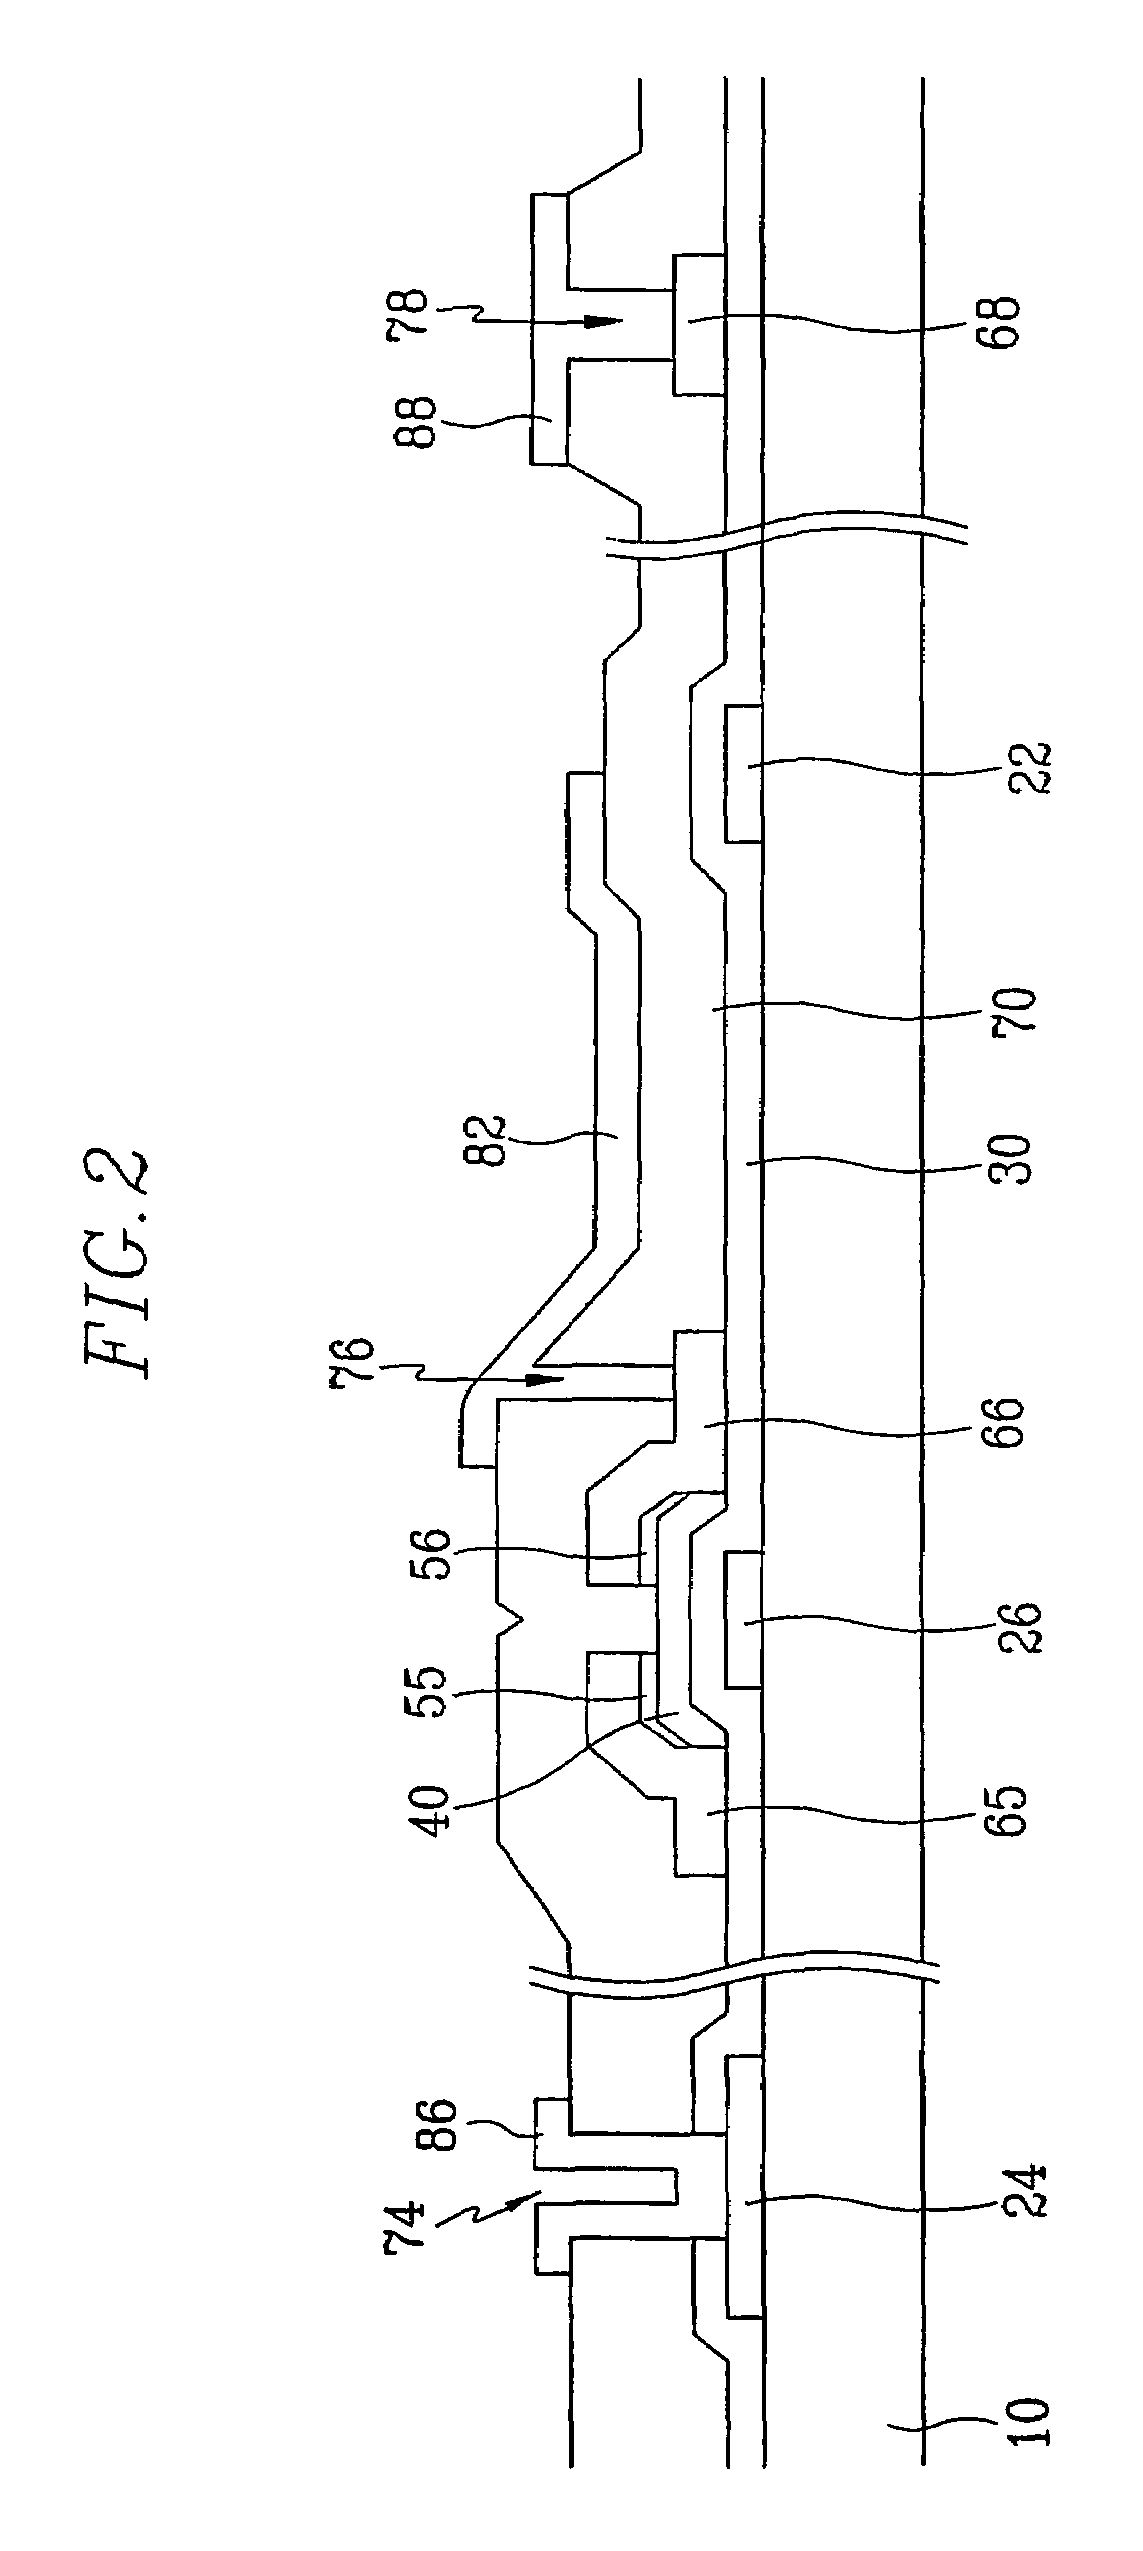 Thin film transistor array panel